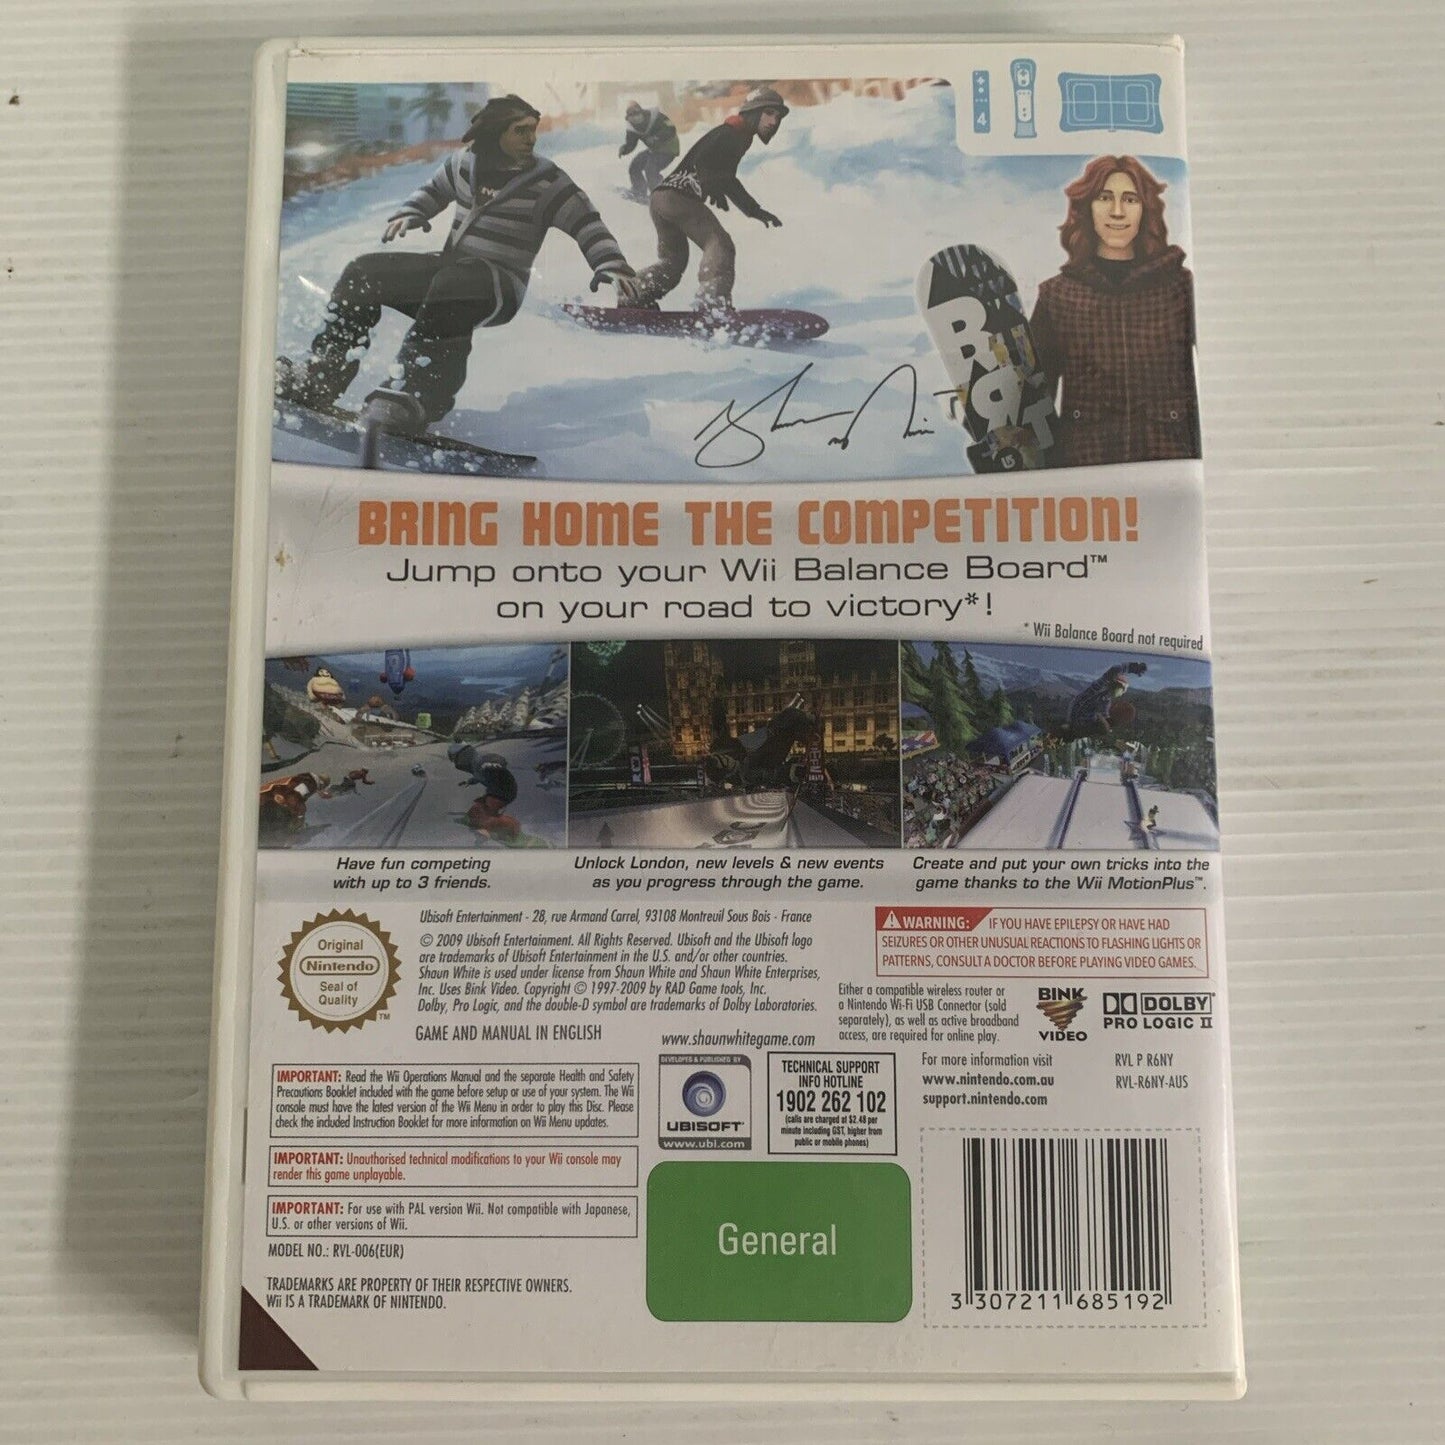 Shaun White Snowboarding World Stage Nintendo Wii Game